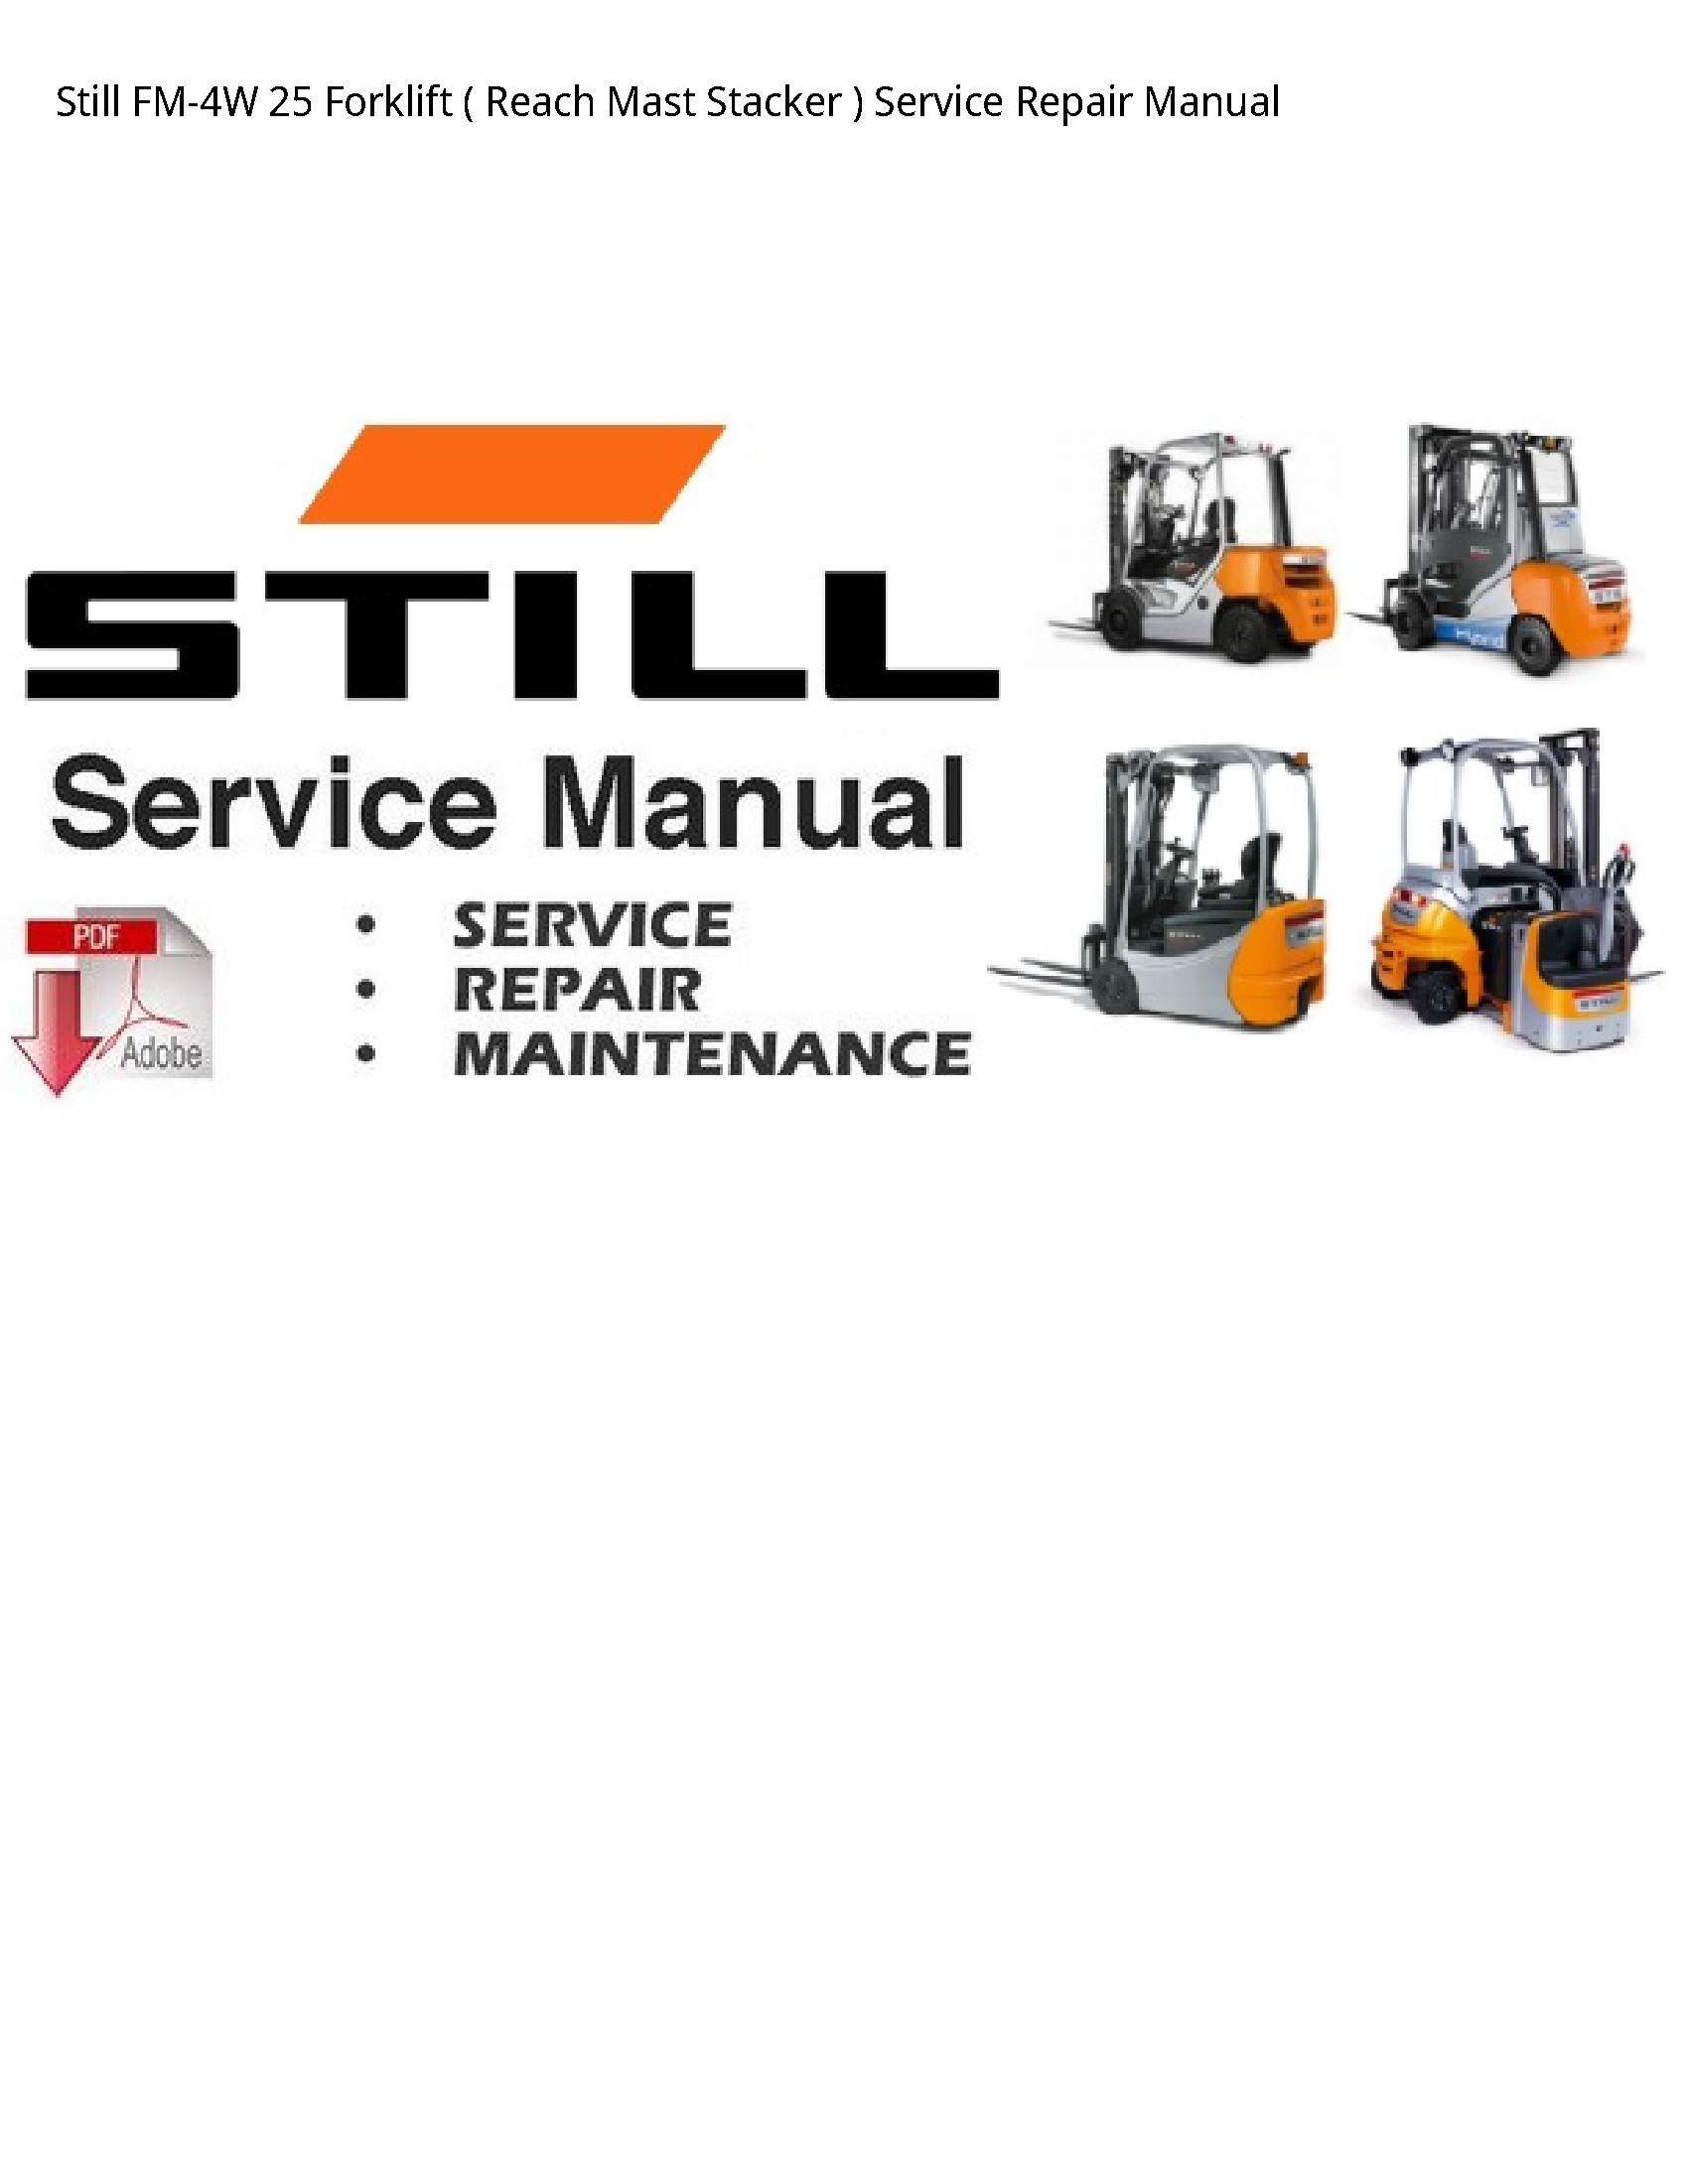 Still FM-4W Forklift Reach Mast Stacker manual